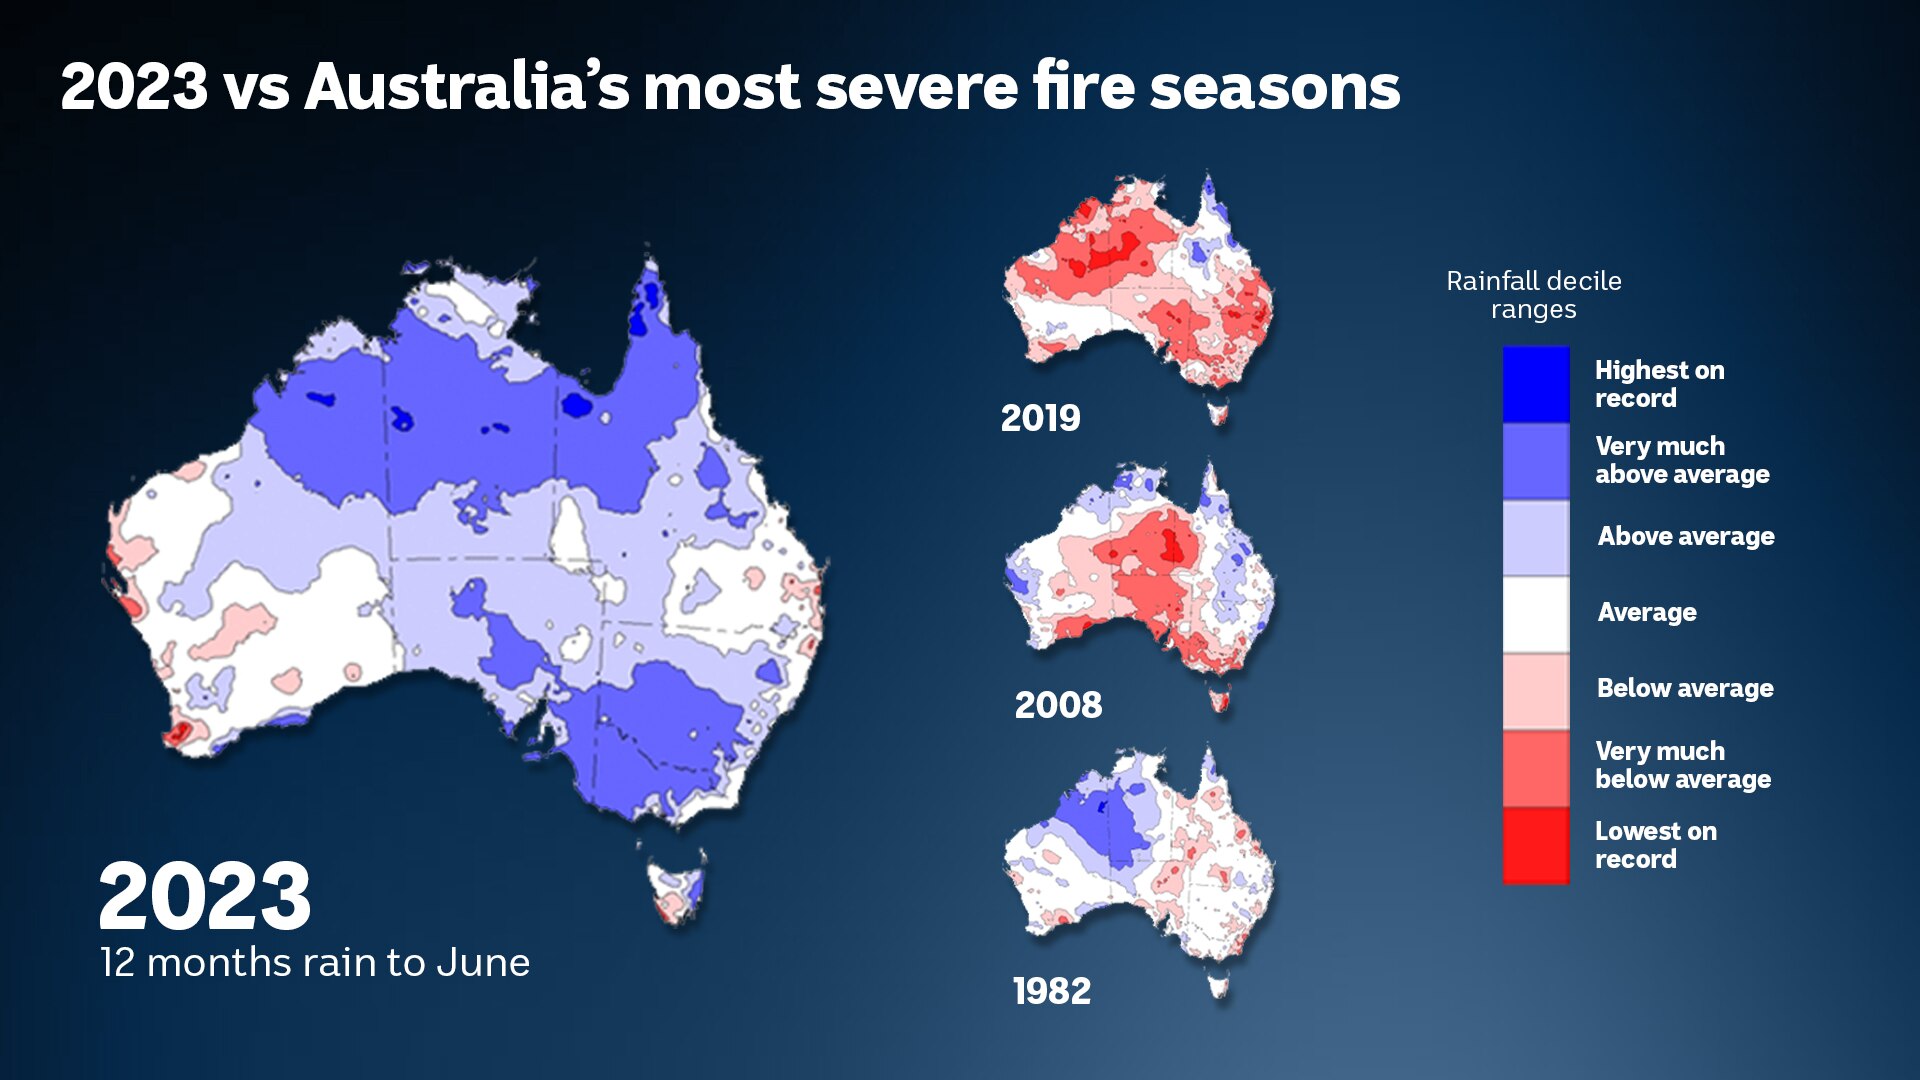 maps of australia showing rain fall and most severe fire seasons